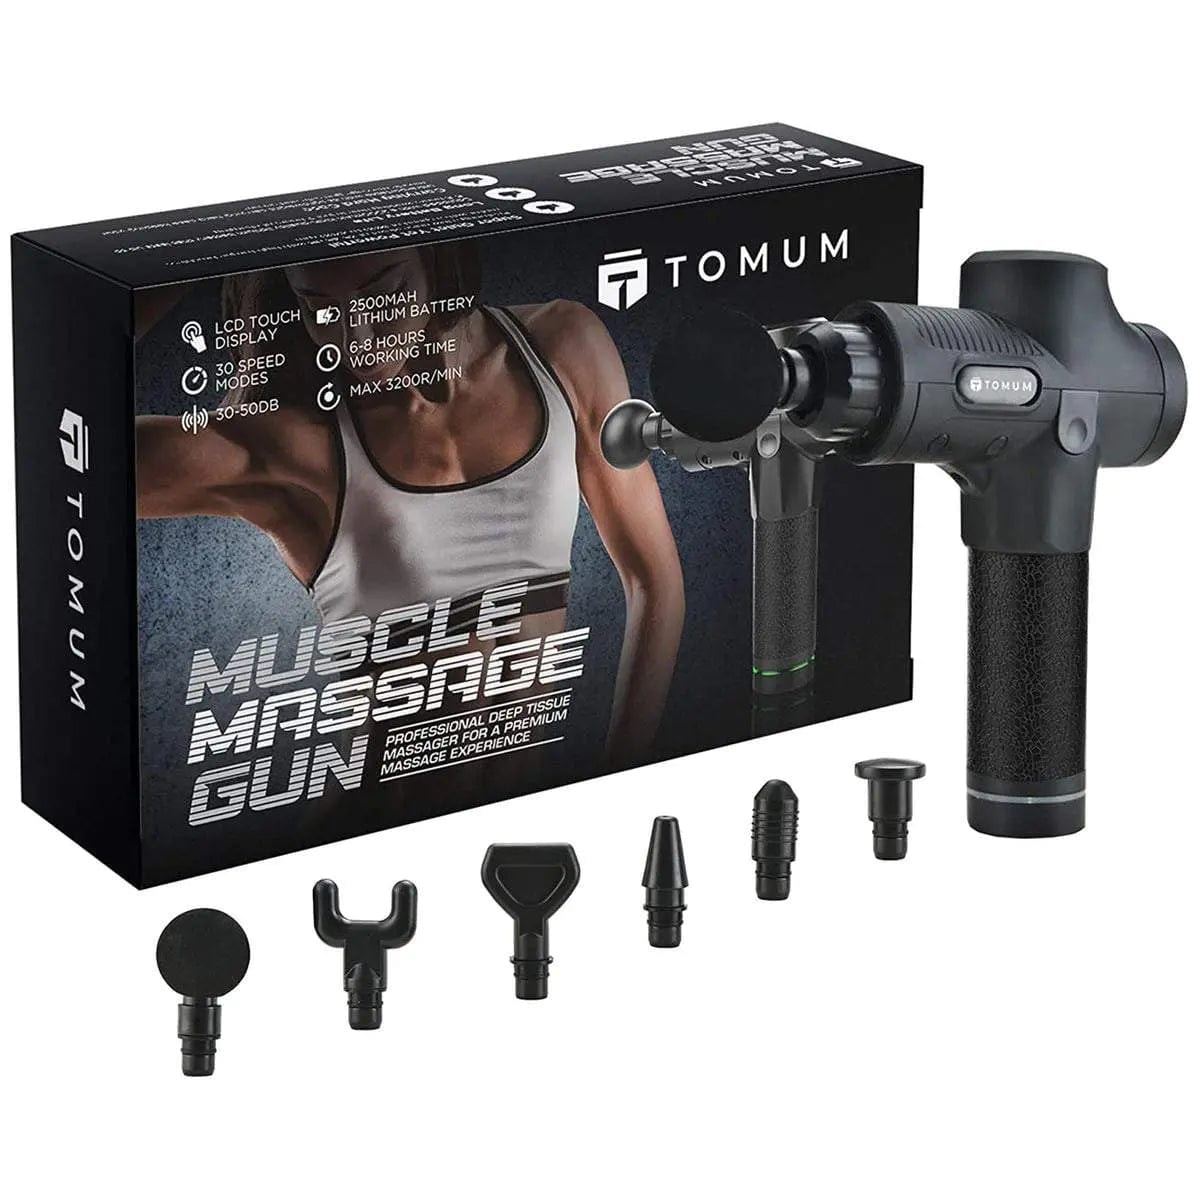 Tomum Deep Muscle Massager Sports & Outdoors 89.99 MPGD Corp Merchandise